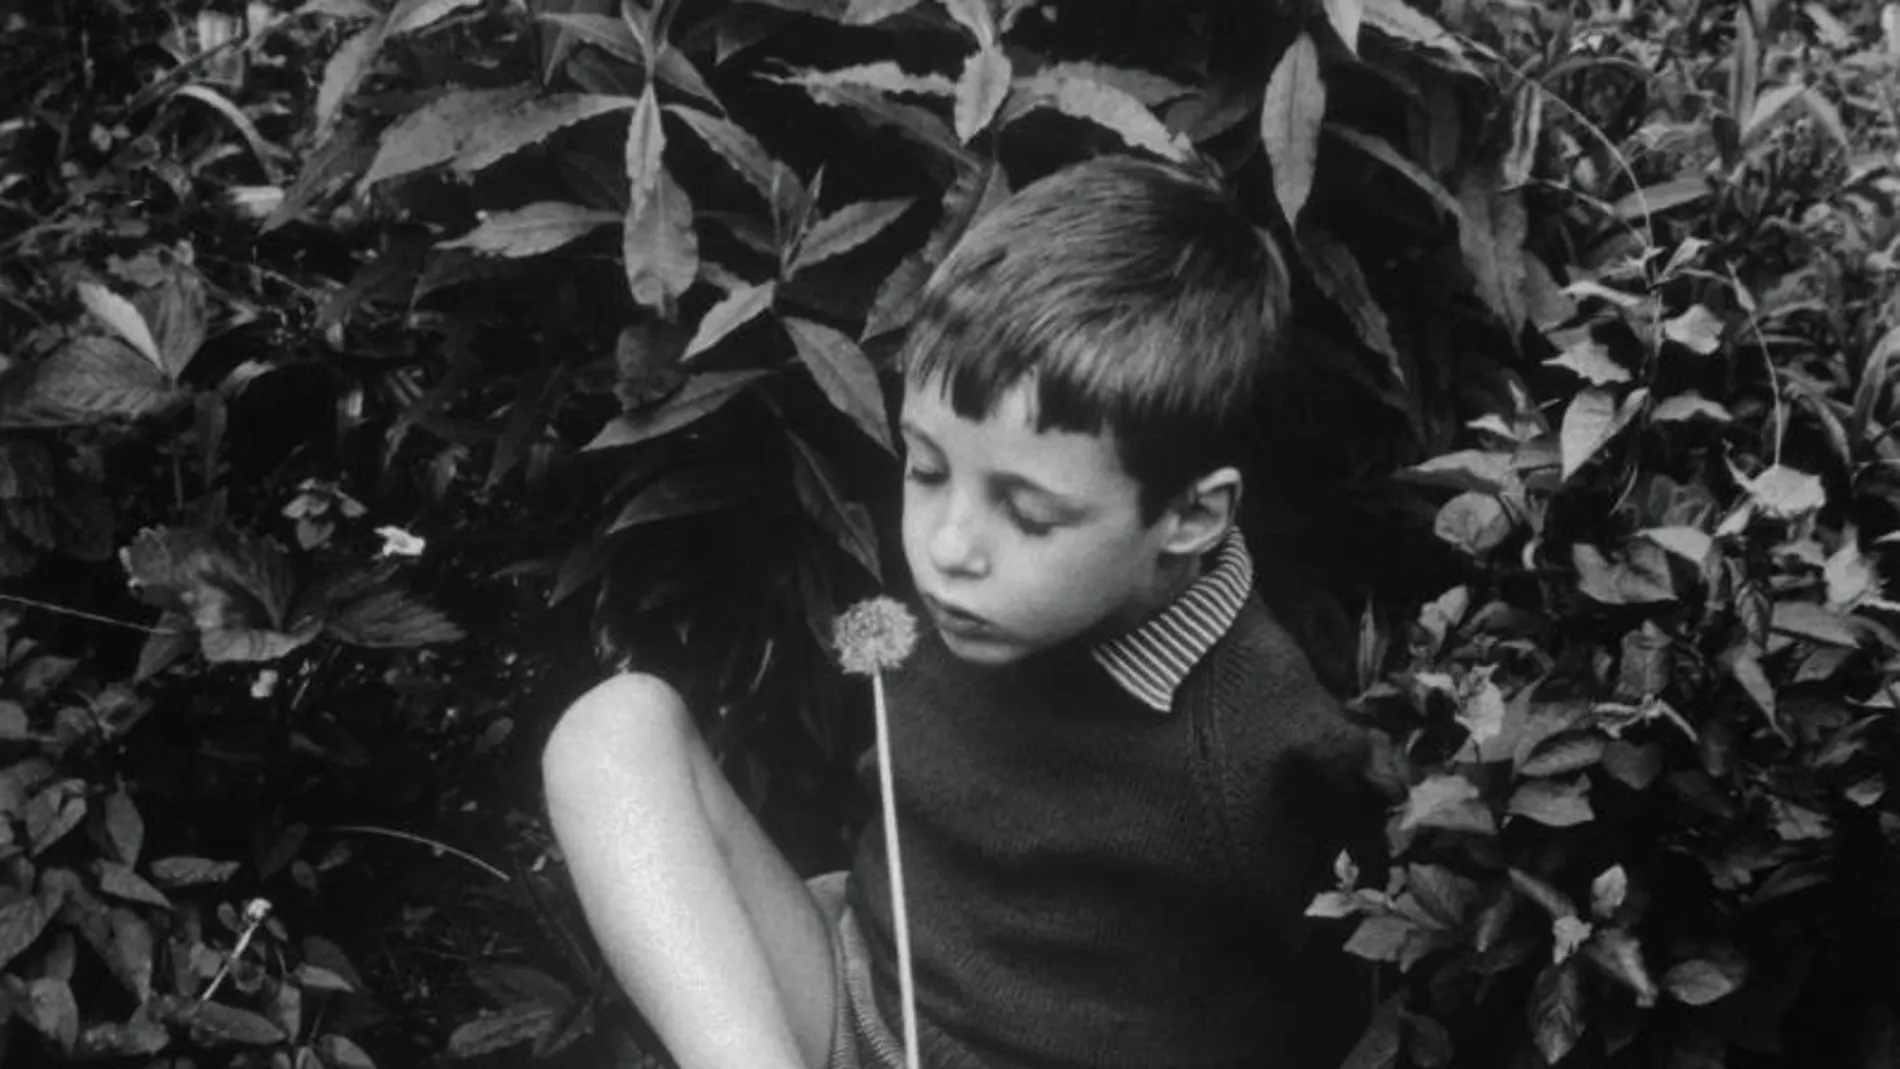 Imagen tomada en 1965 de un niño británico afectado por talidomida